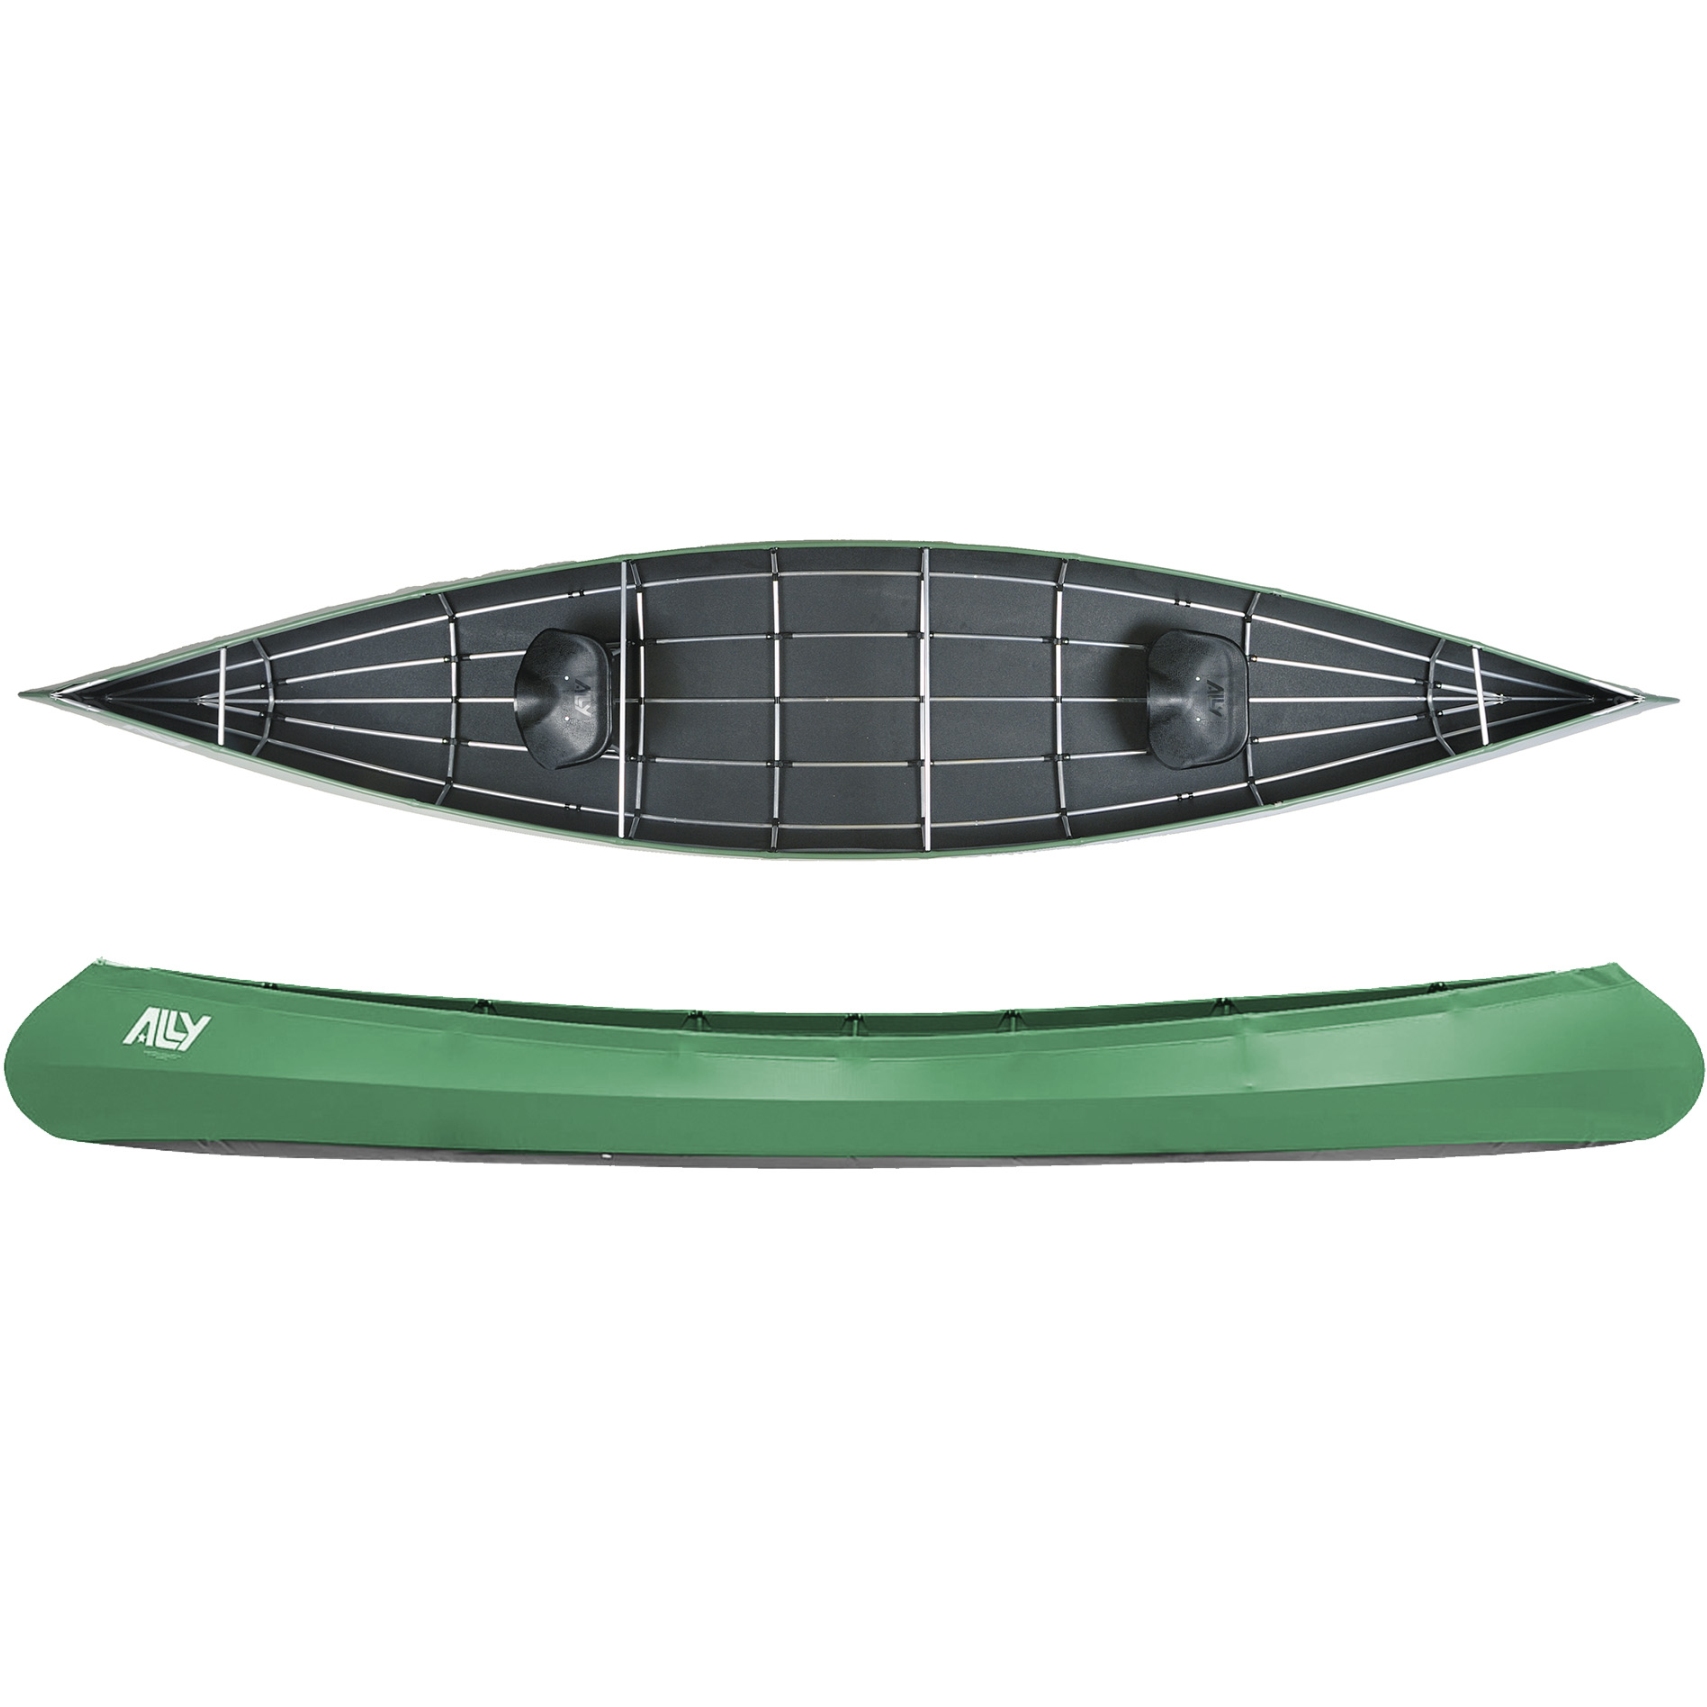 Productfoto van Bergans Ally 16.5 - Opvouwbare Kano - groen